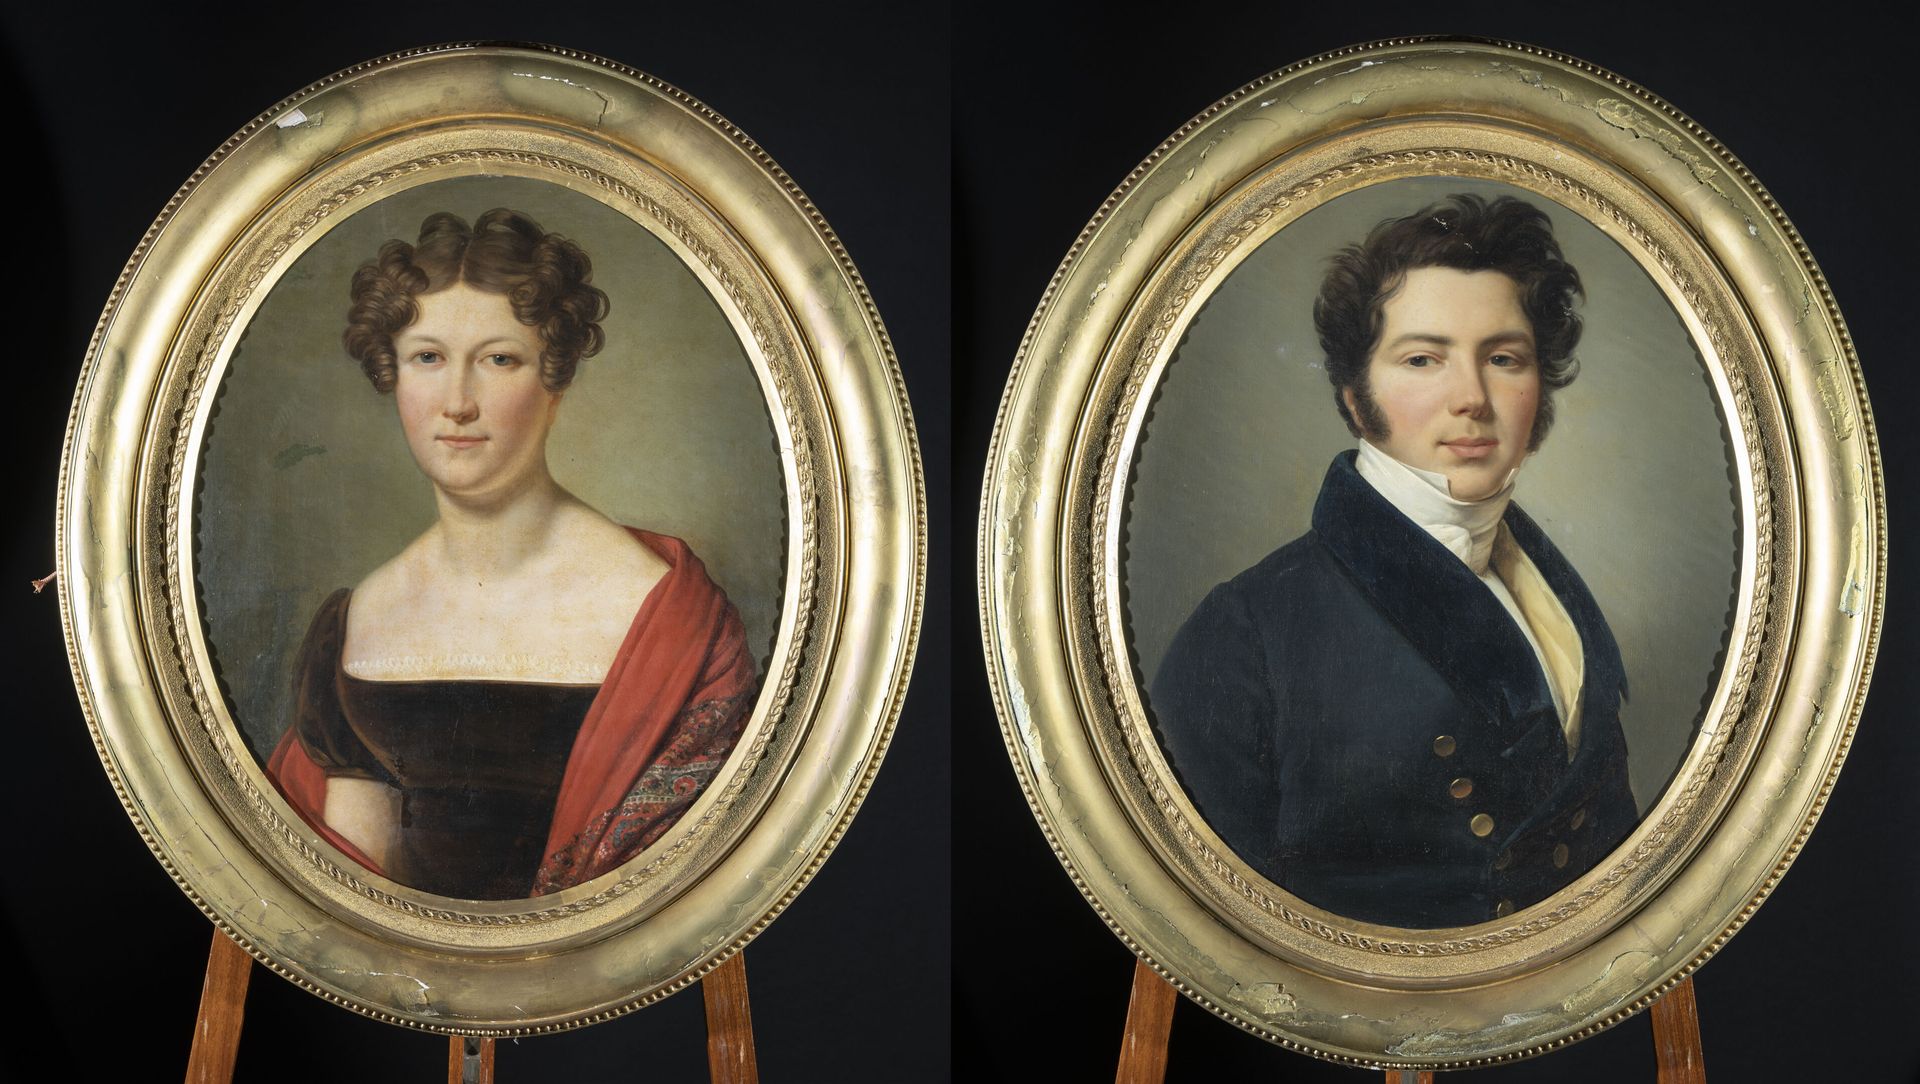 Null 19世纪初的法国学校
一个男人和他妻子的画像
布面油画一对
H.66厘米，宽53厘米，高64厘米，宽54厘米 HVS
修缮

在夫人画像的背面有一个旧&hellip;